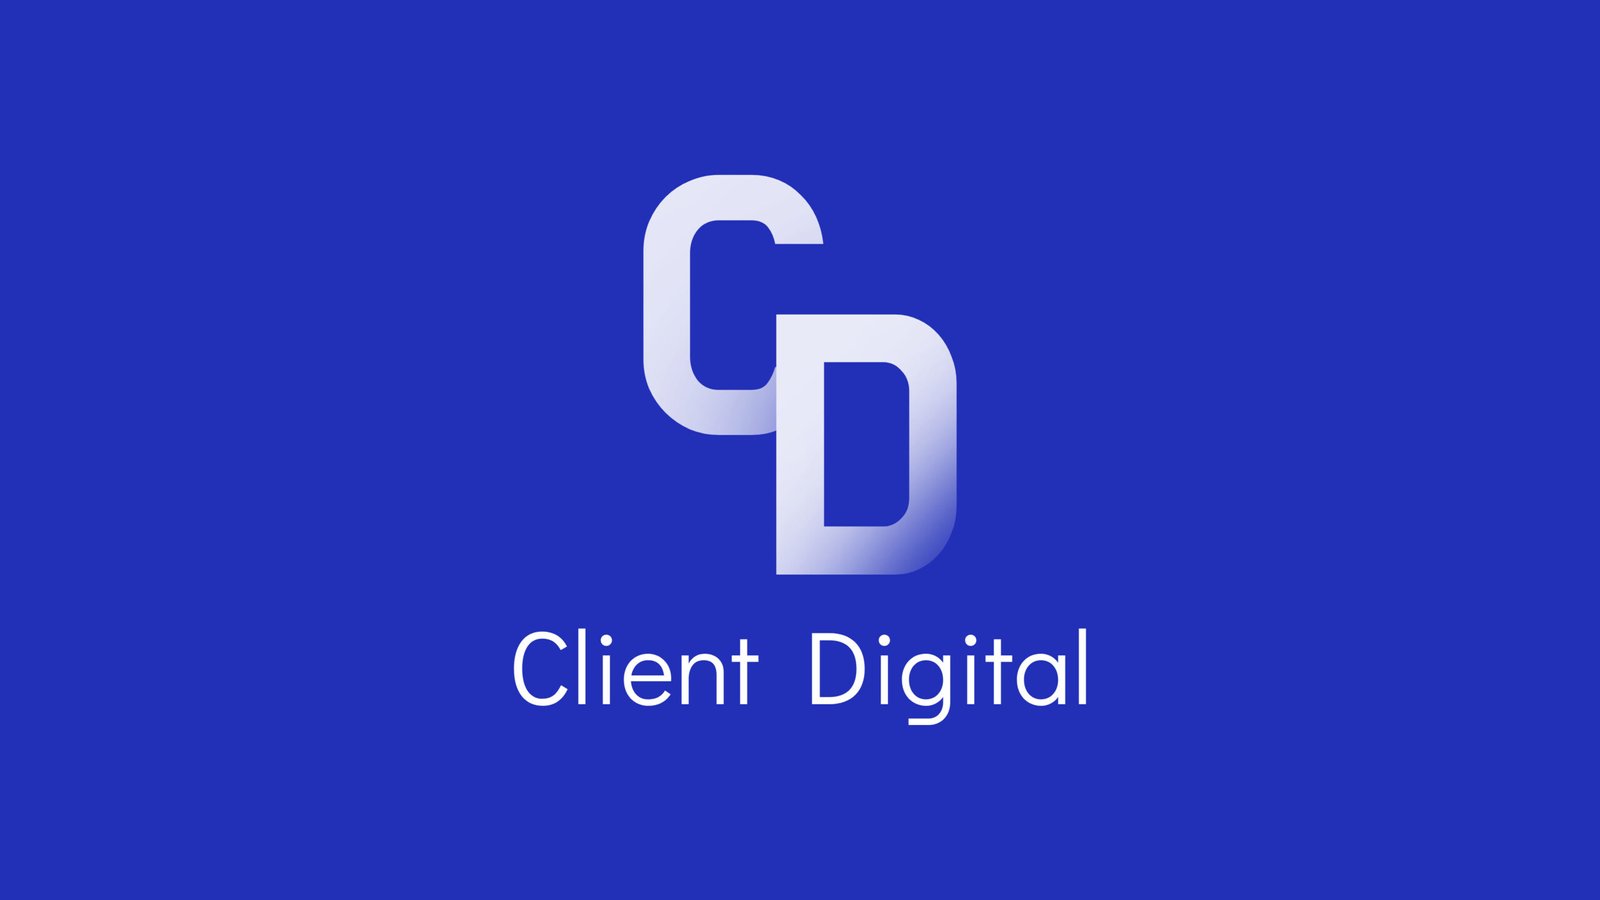 Client Digital